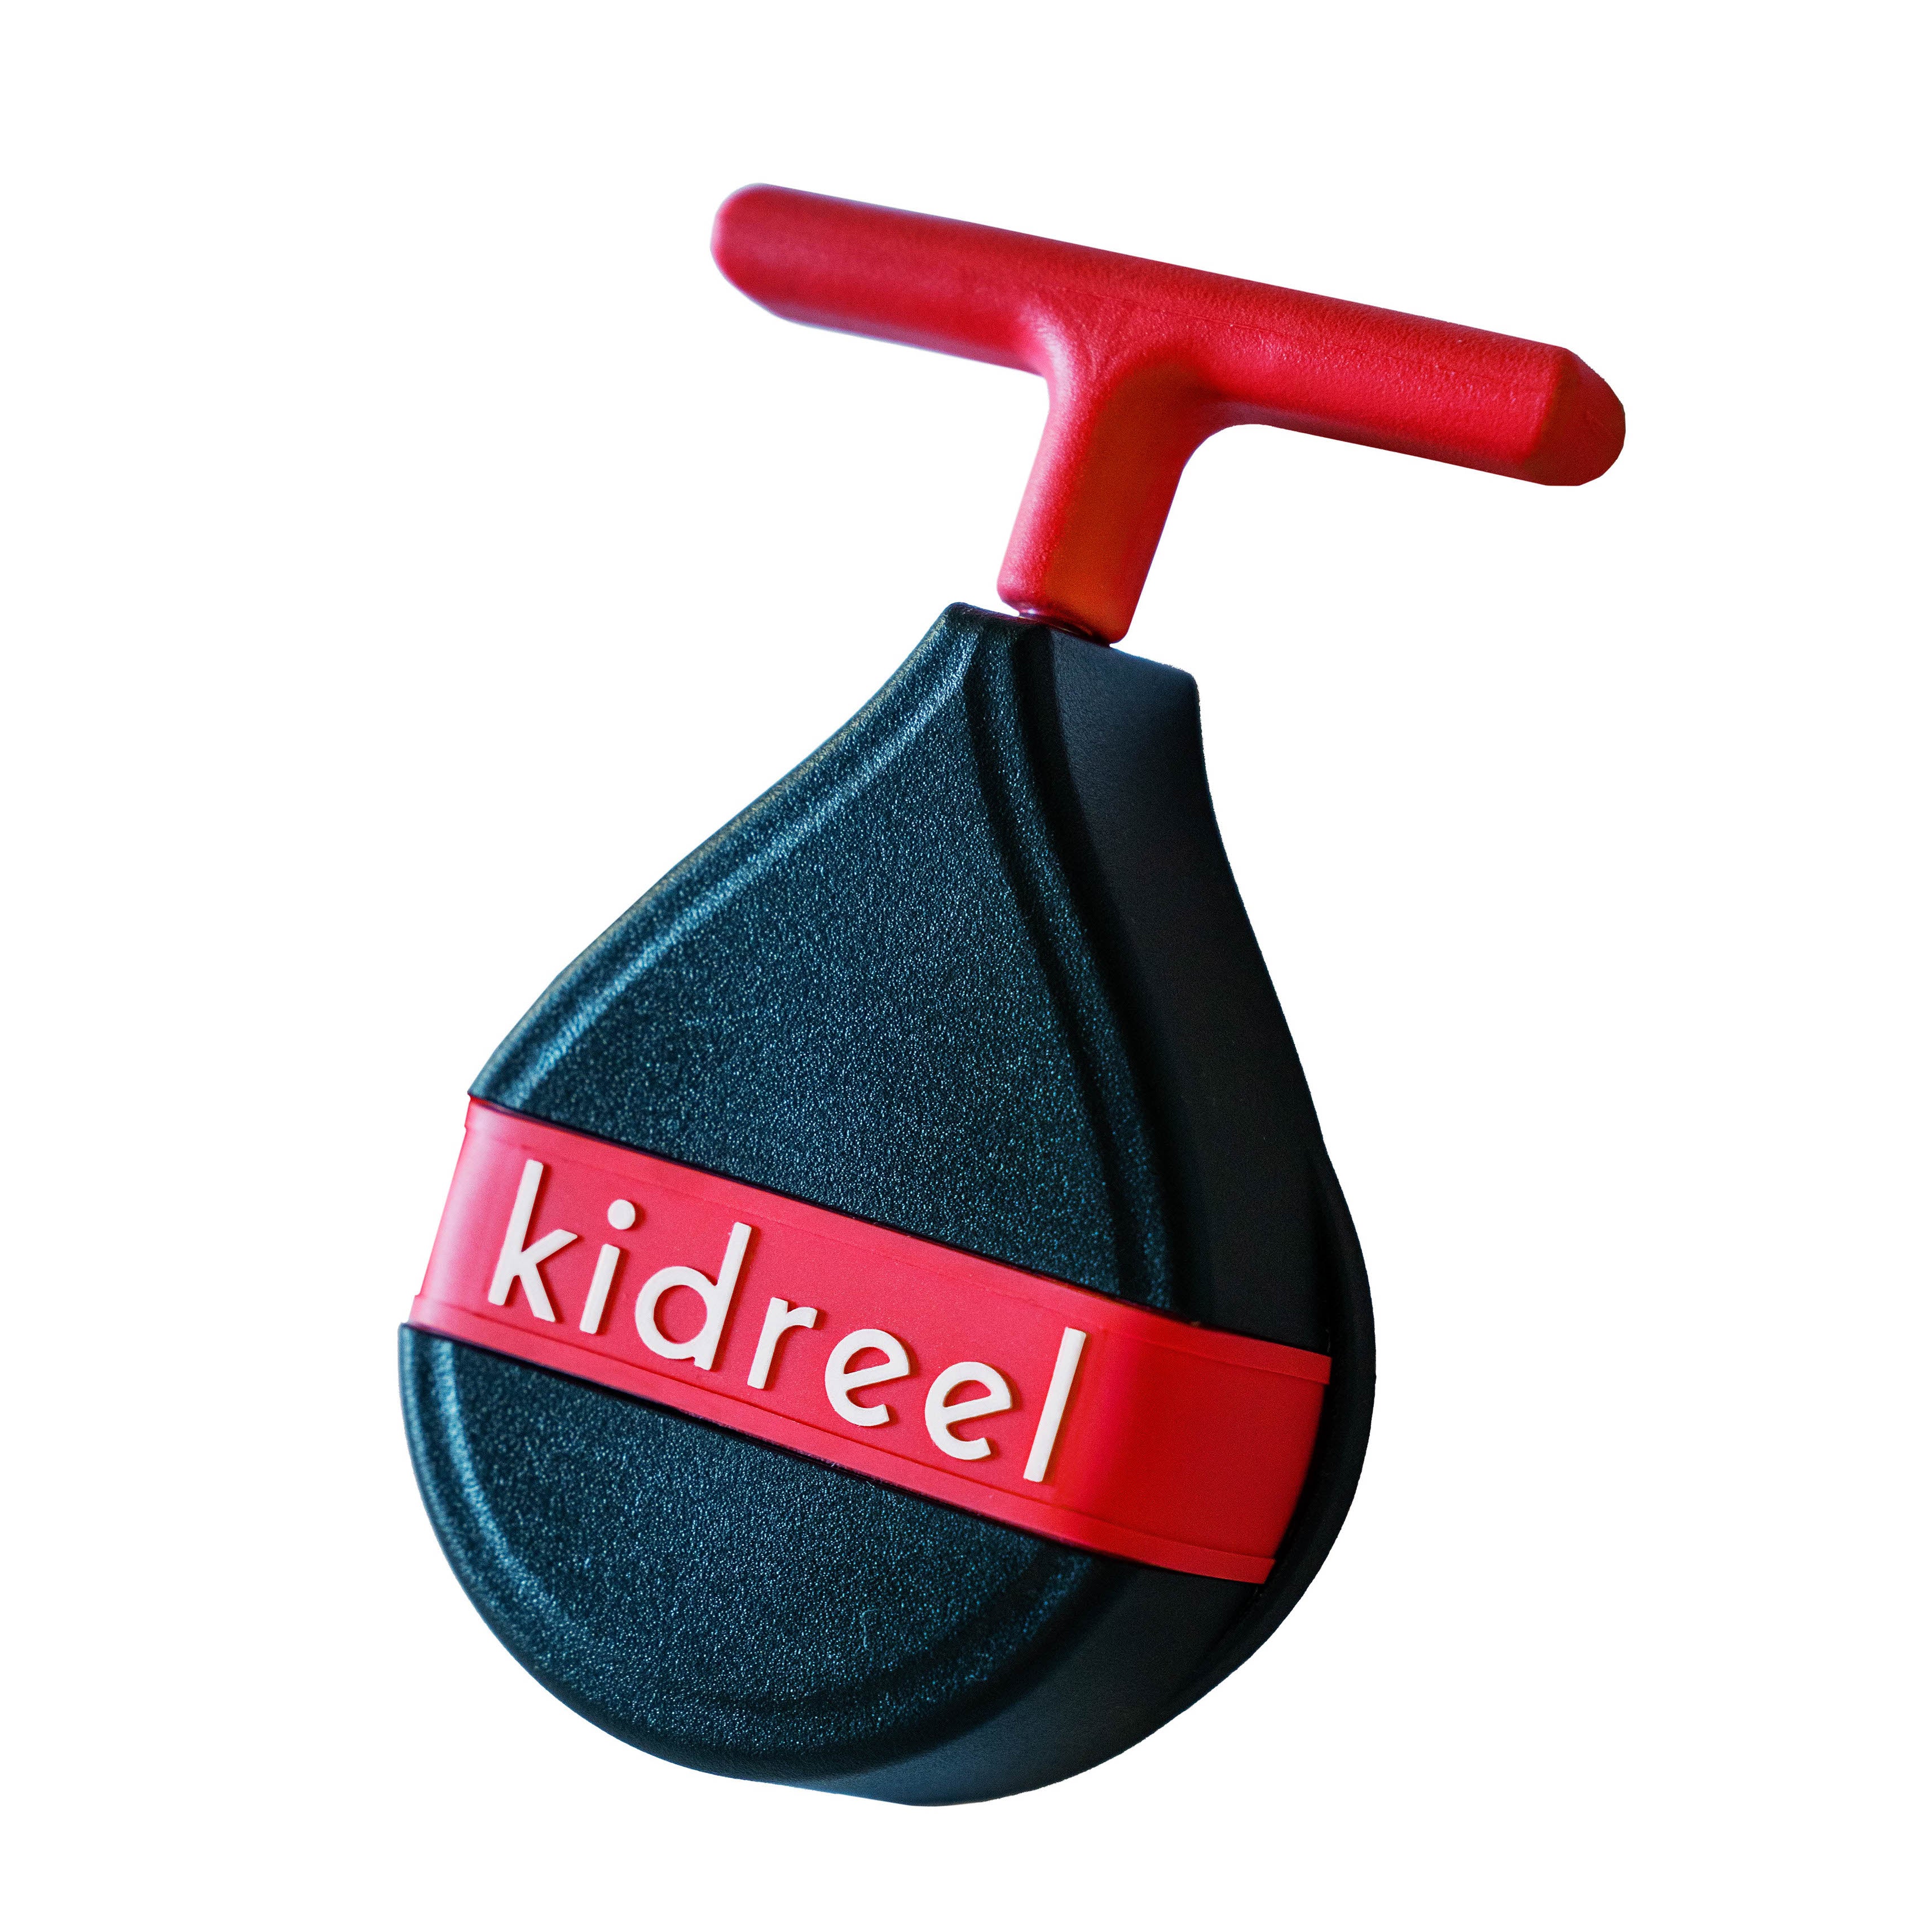 The Kidreel